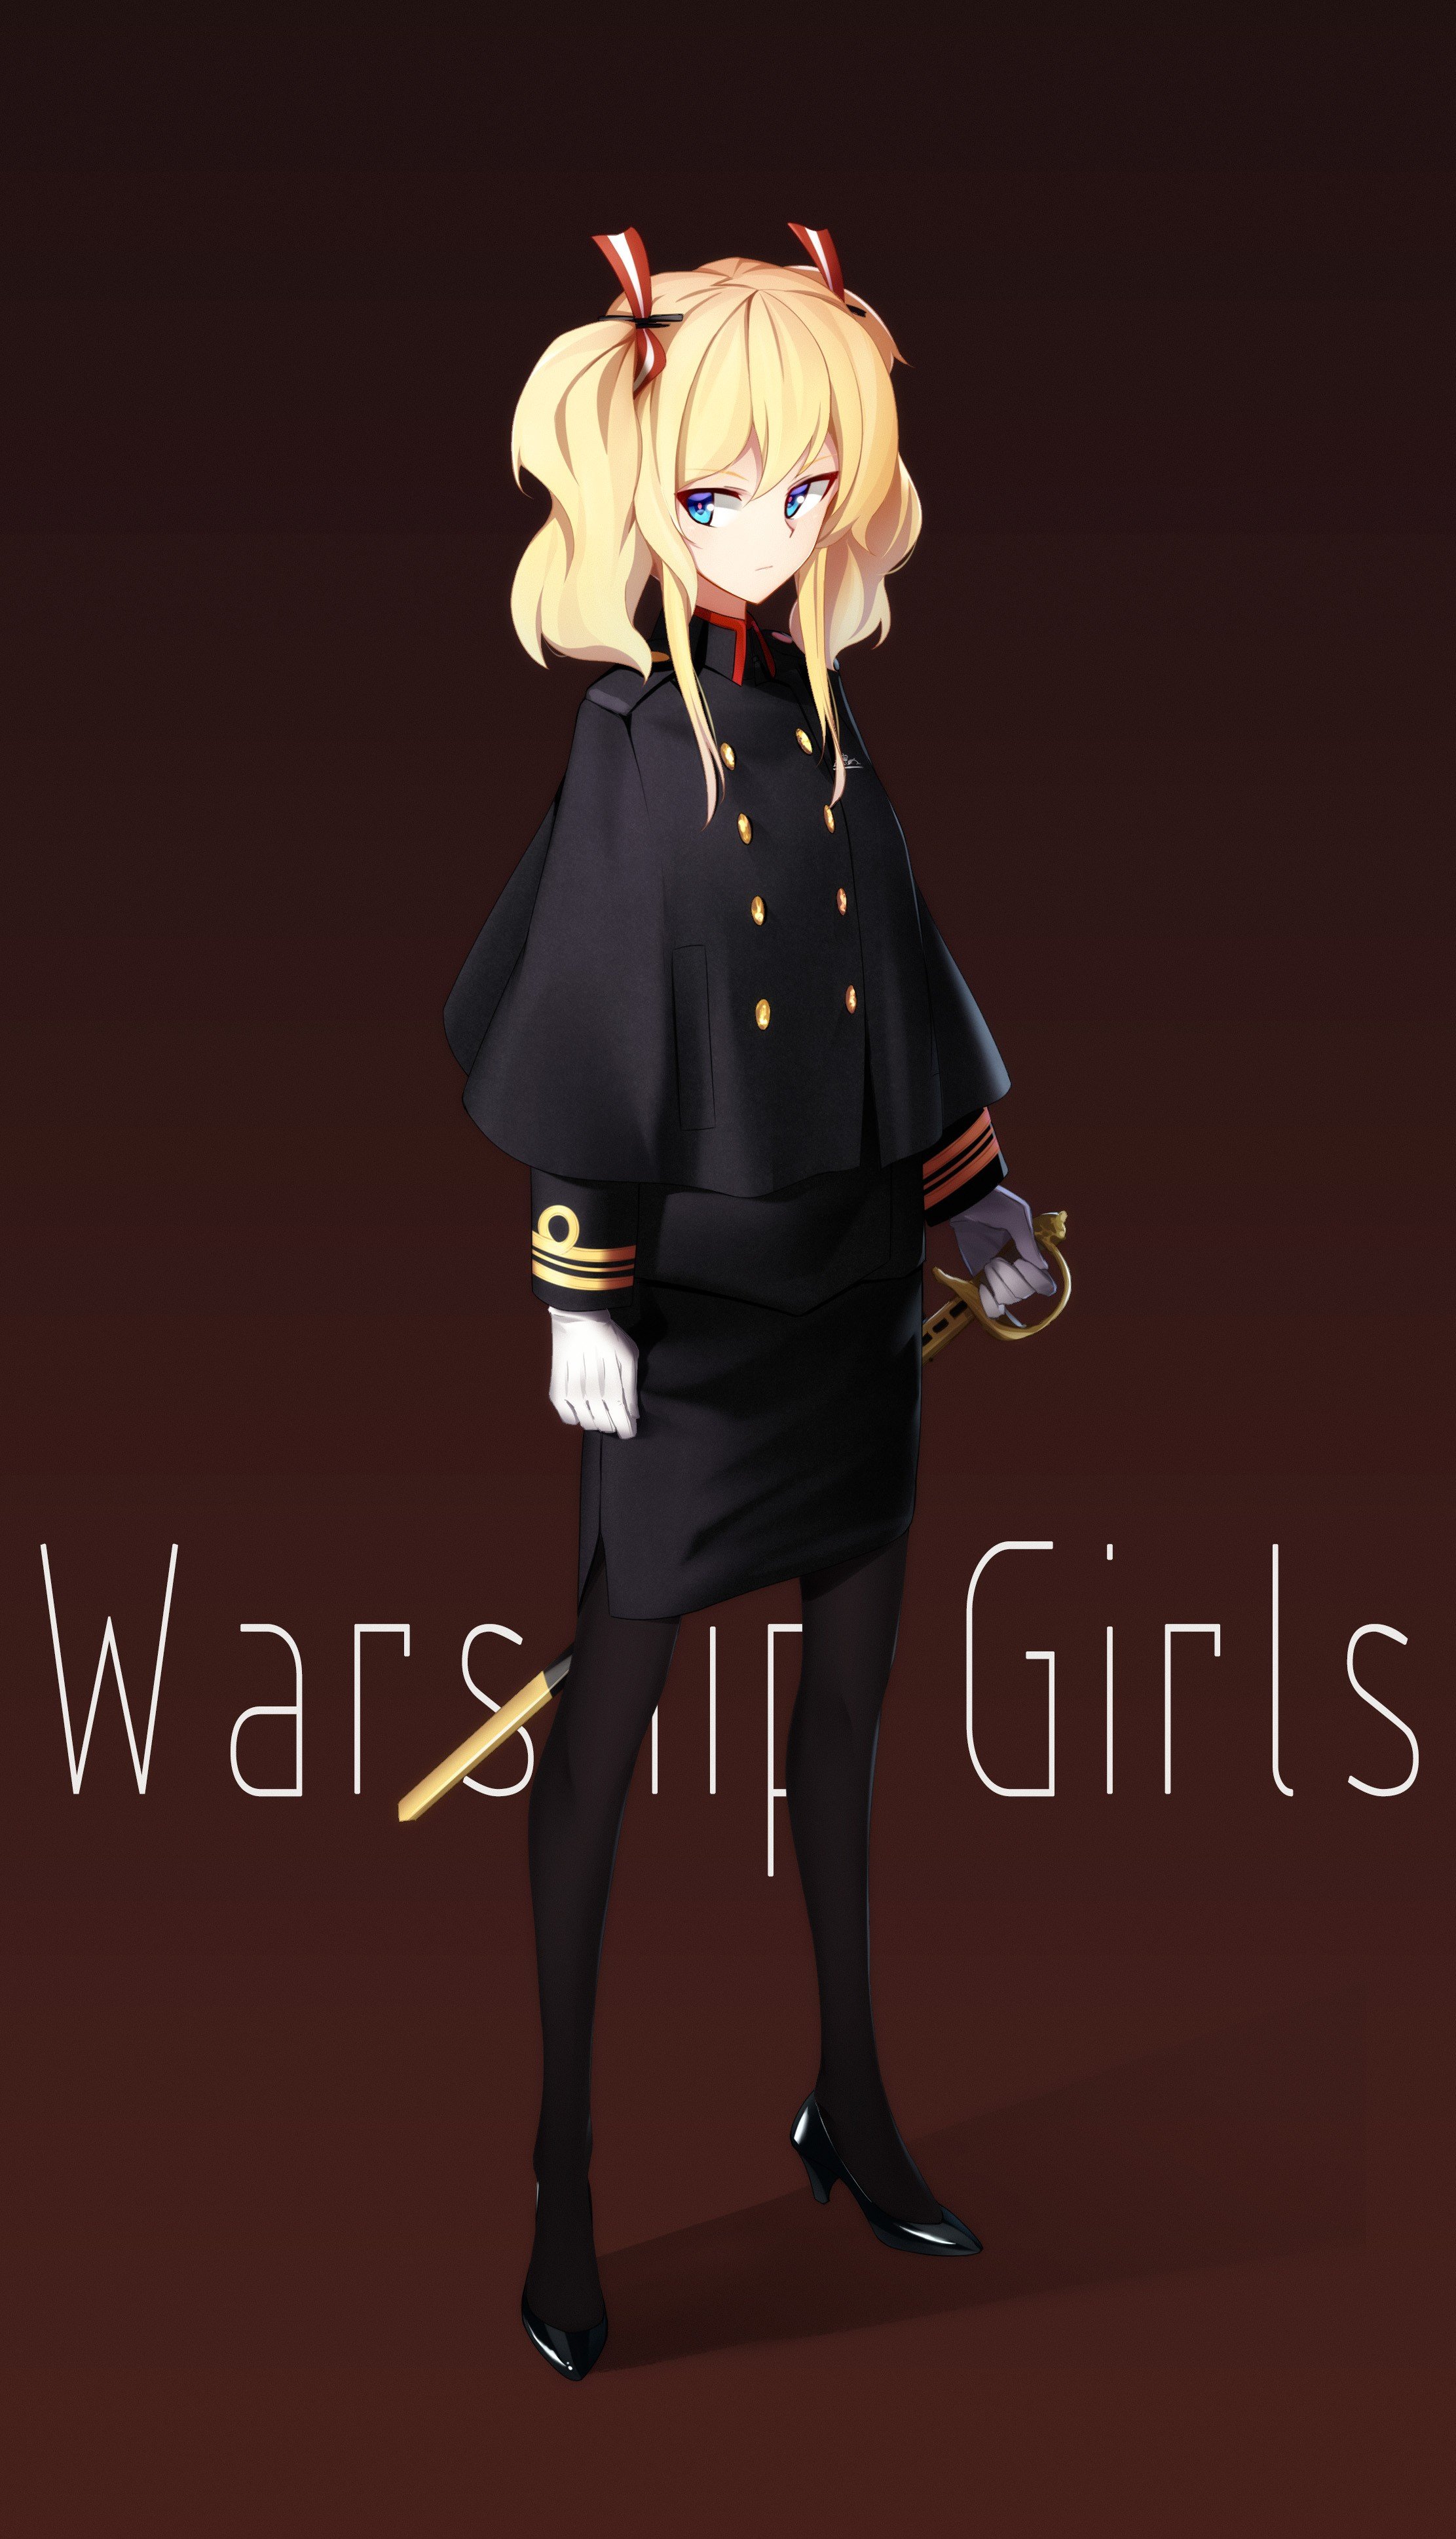 long hair, Blonde, Blue eyes, Anime, Anime girls, Warship Girls, Uniform, Sword, Twintails Wallpaper